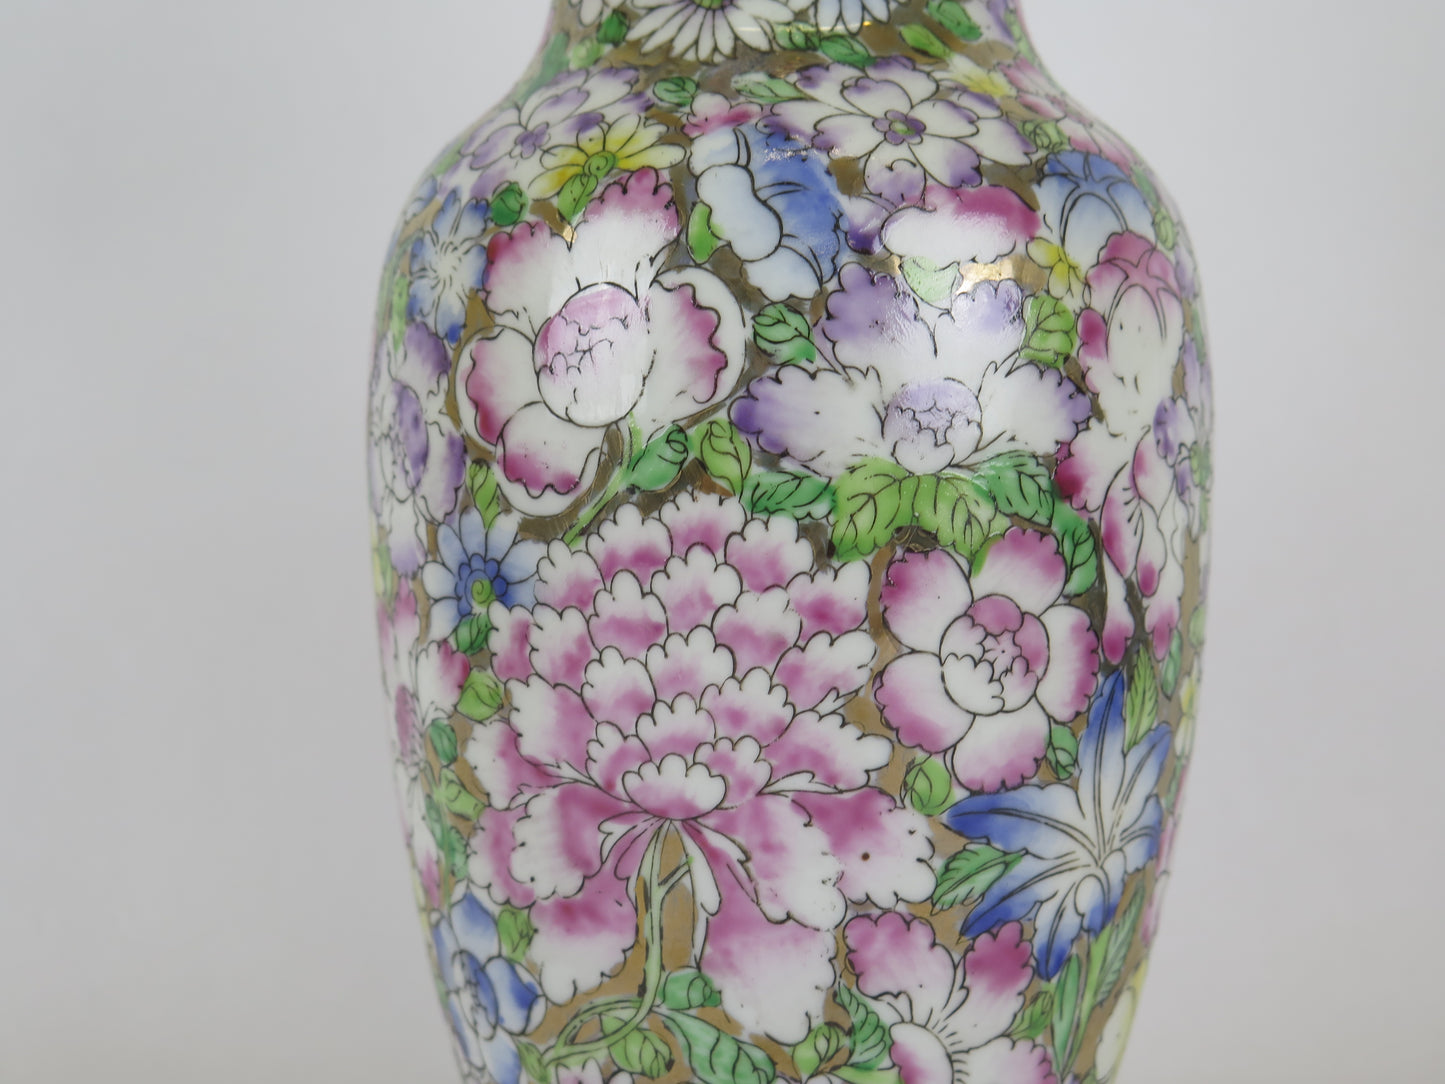 Hand painted porcelain flower vase China Asia vintage home decoration CM4 a